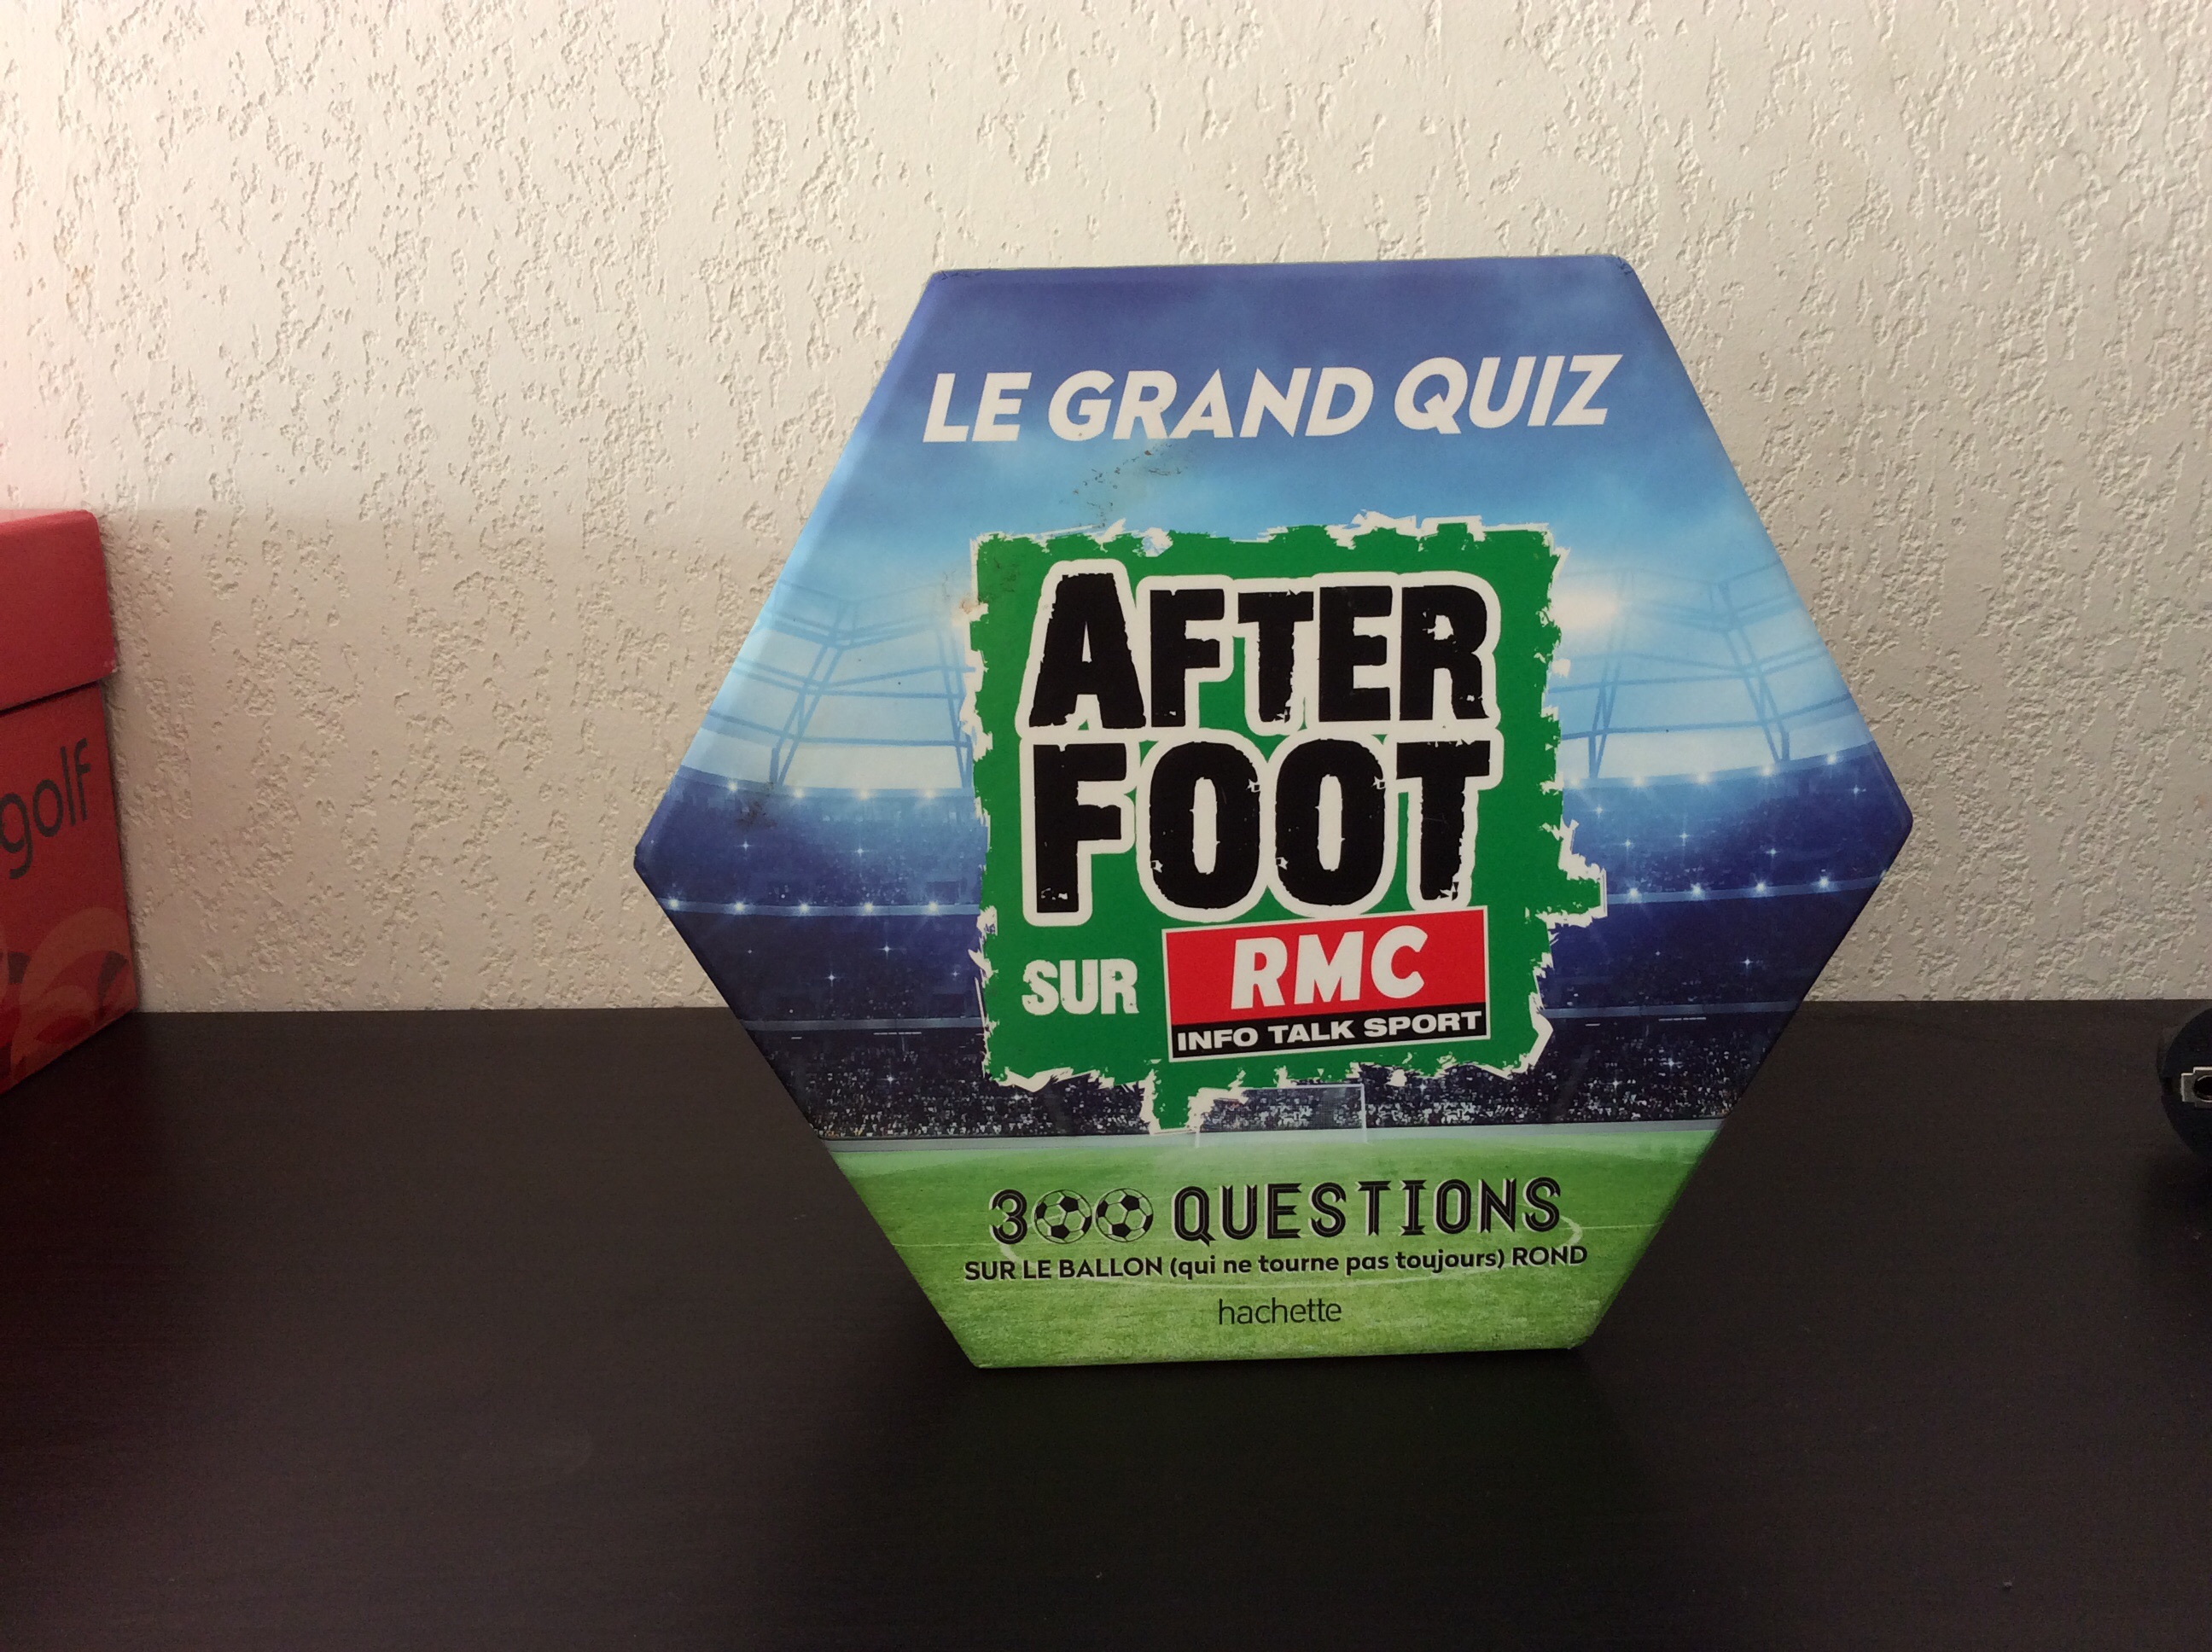 Le grand quiz after foot